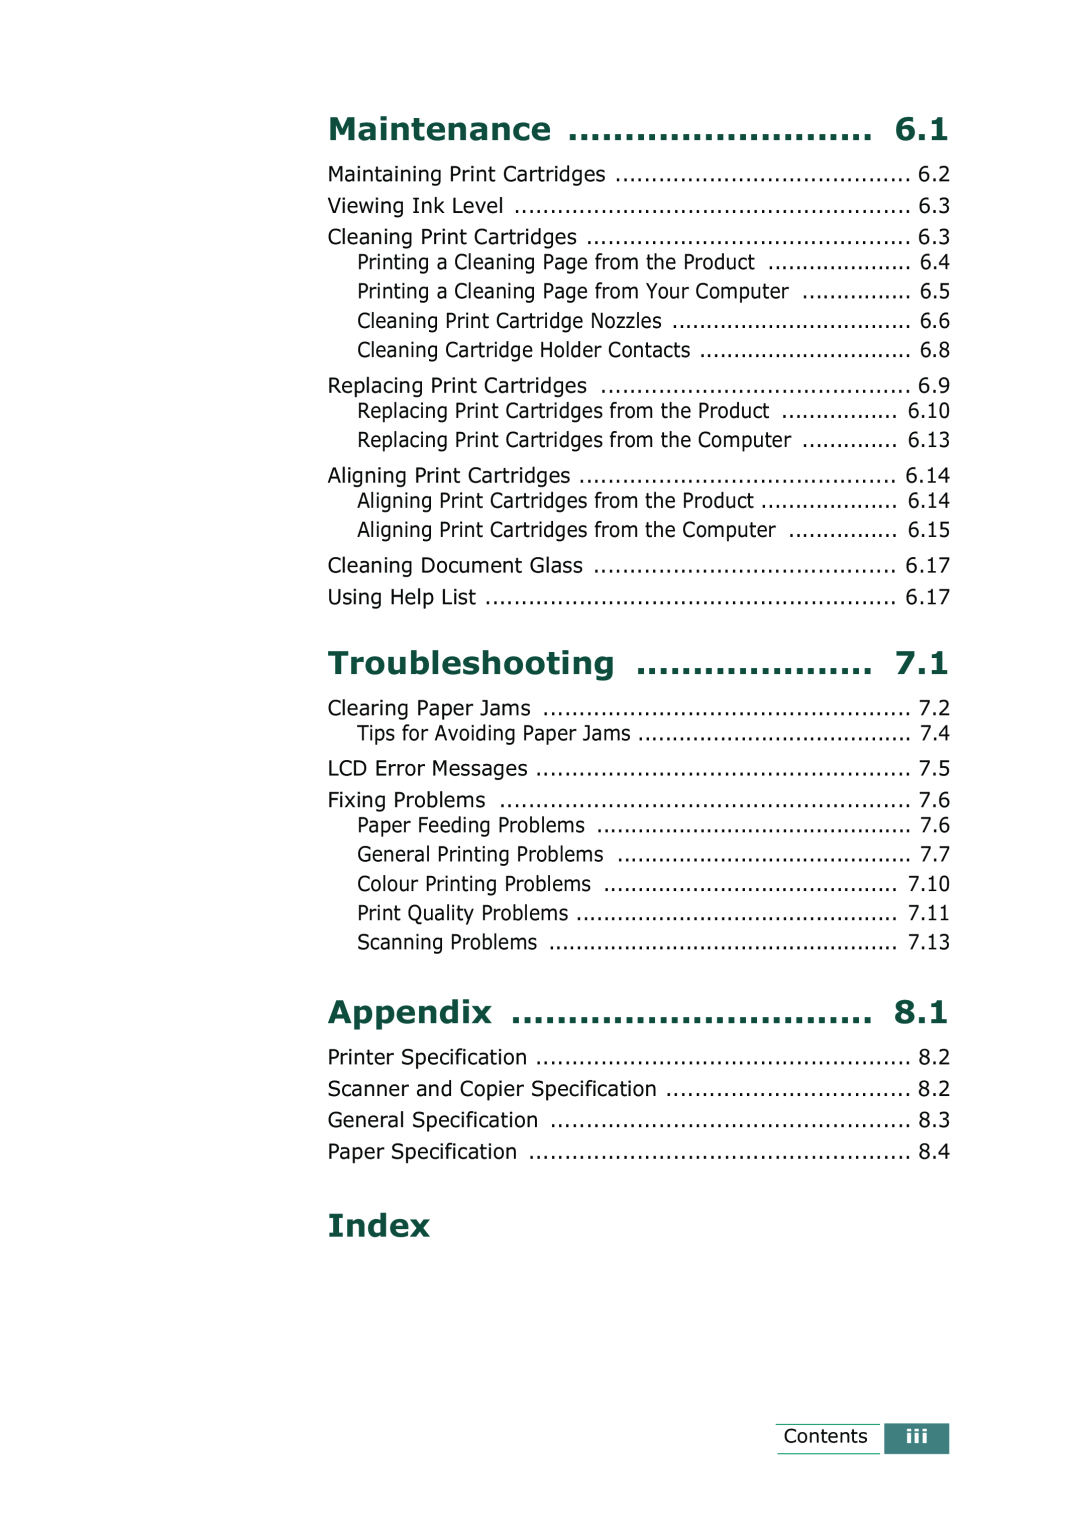 Samsung SCX-1100 manual Maintenance, Troubleshooting, Appendix, Index 